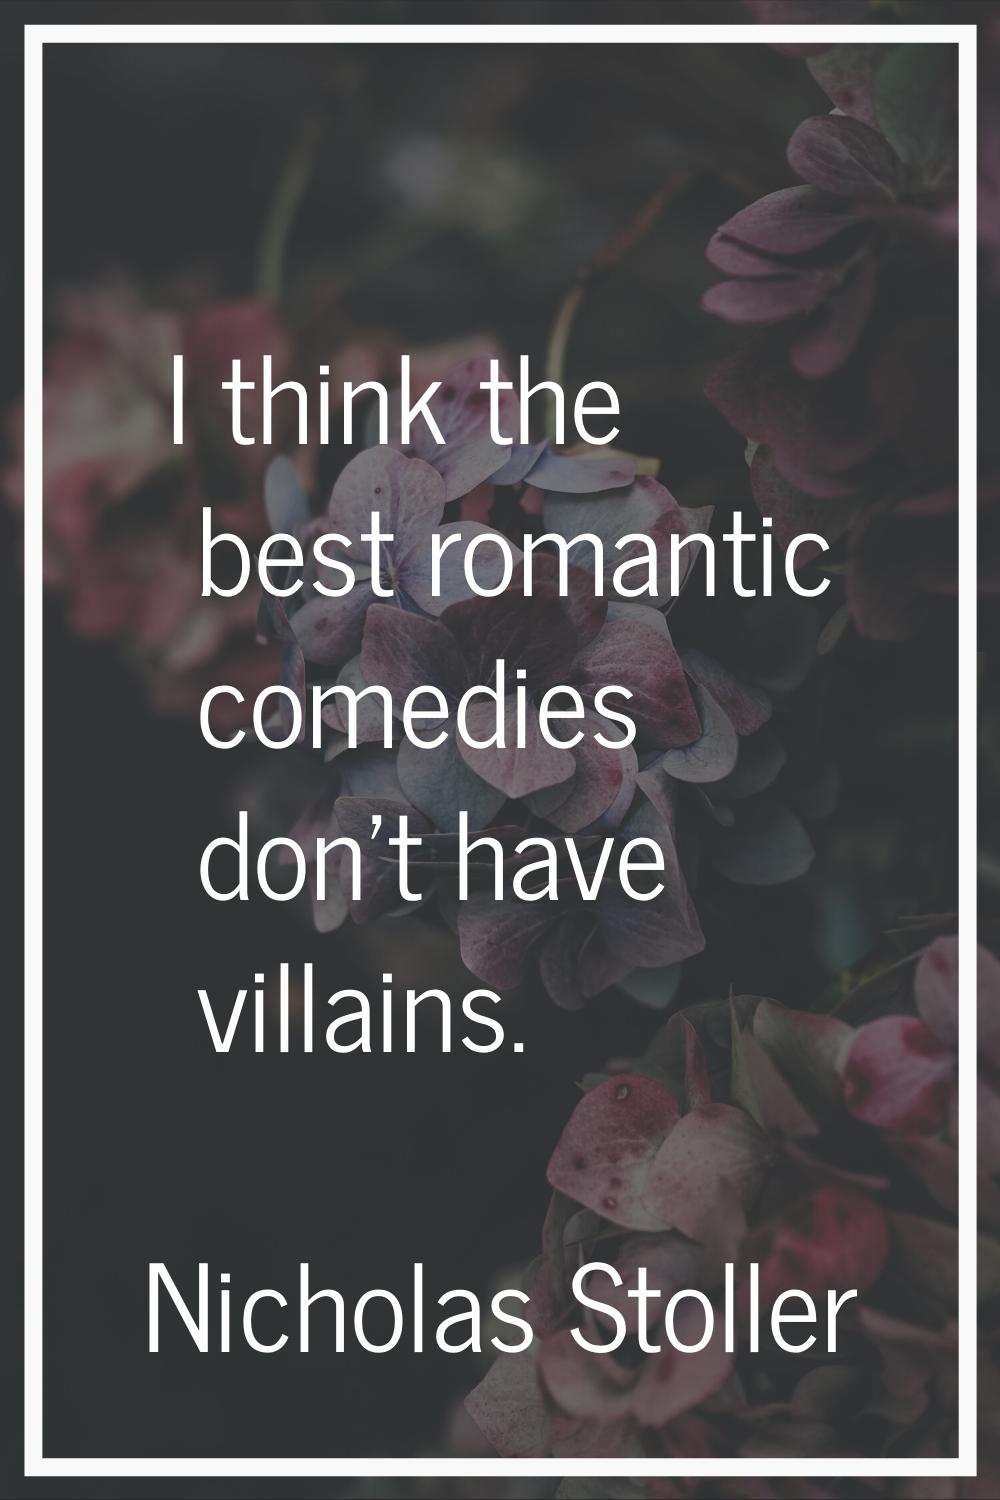 I think the best romantic comedies don't have villains.